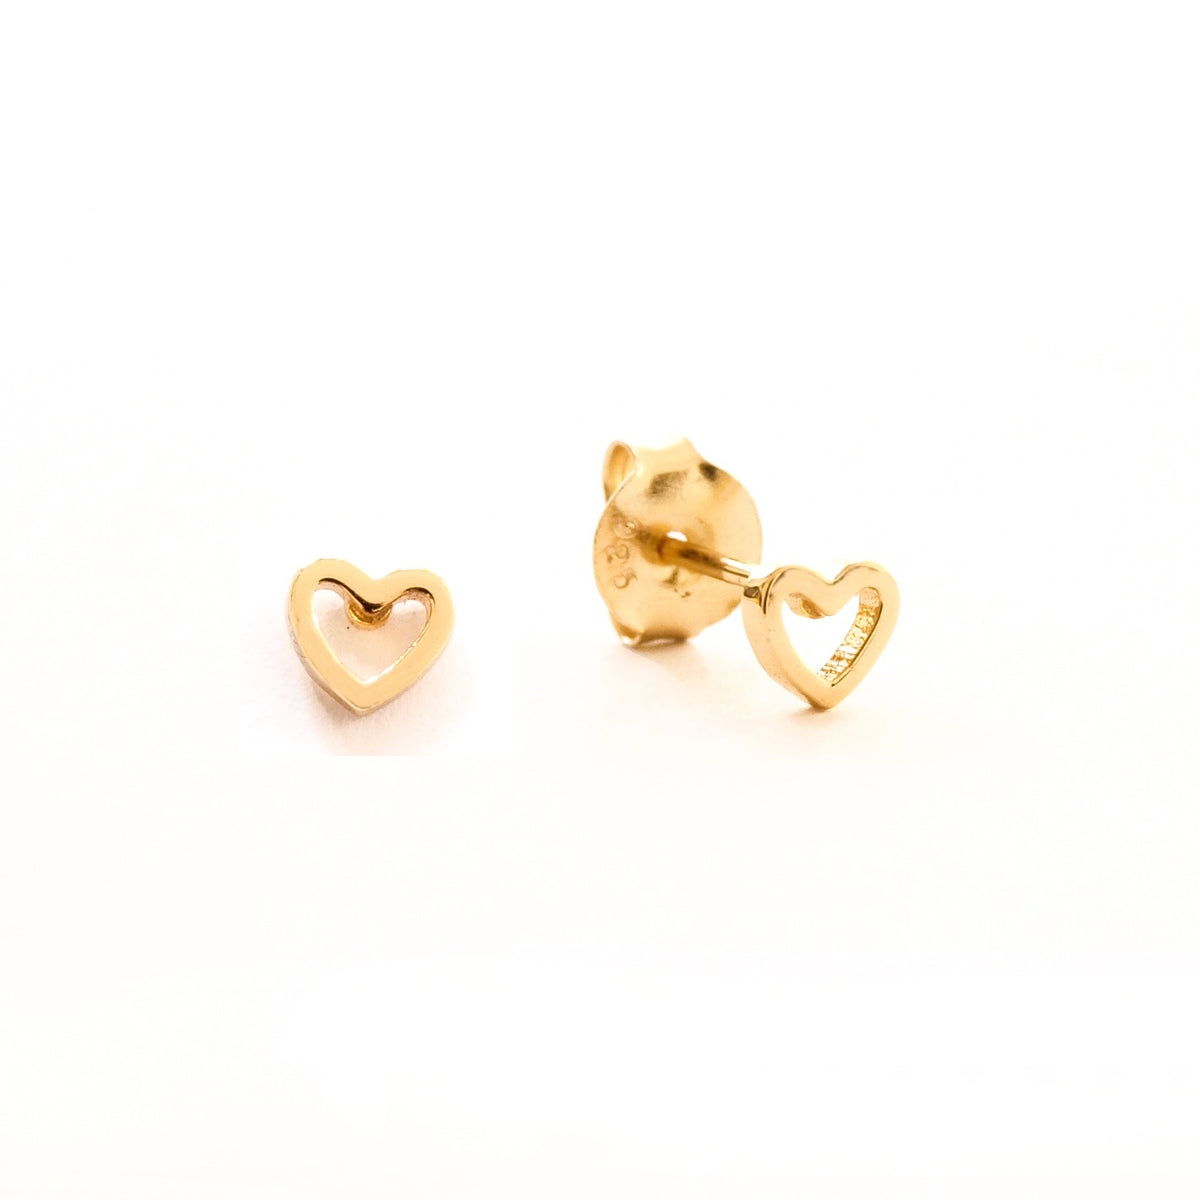 Heart silhouette gold - ByMirelae